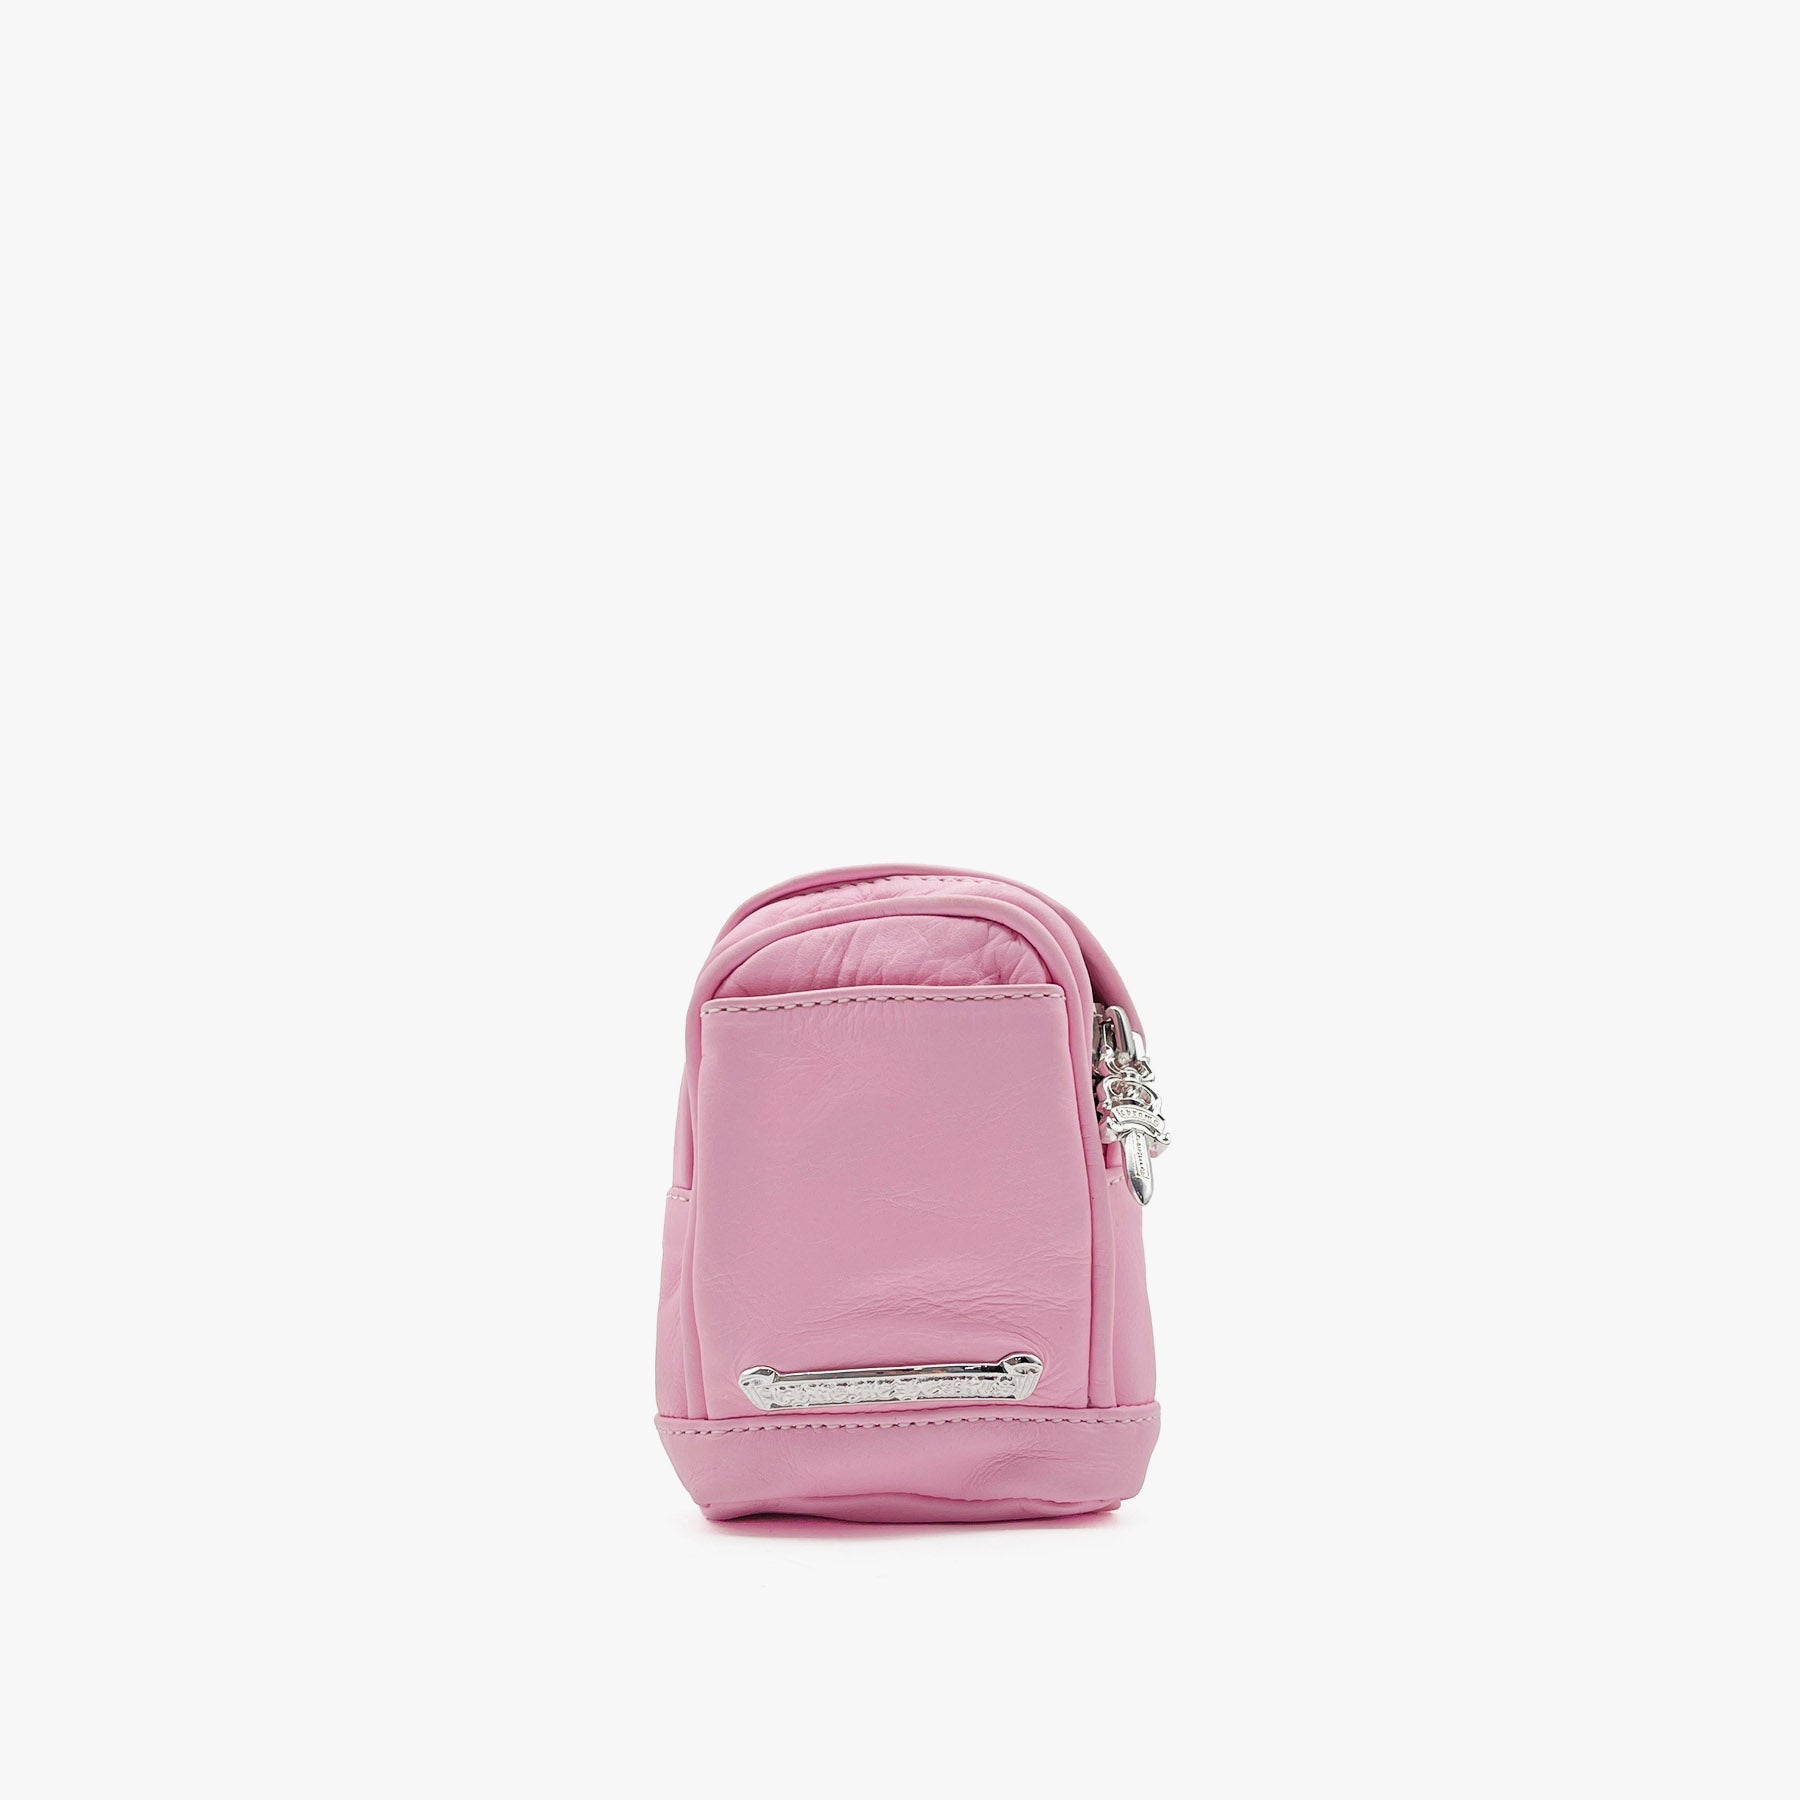 Chrome Hearts Paris Exclusive Baby Pink Wrist Bag